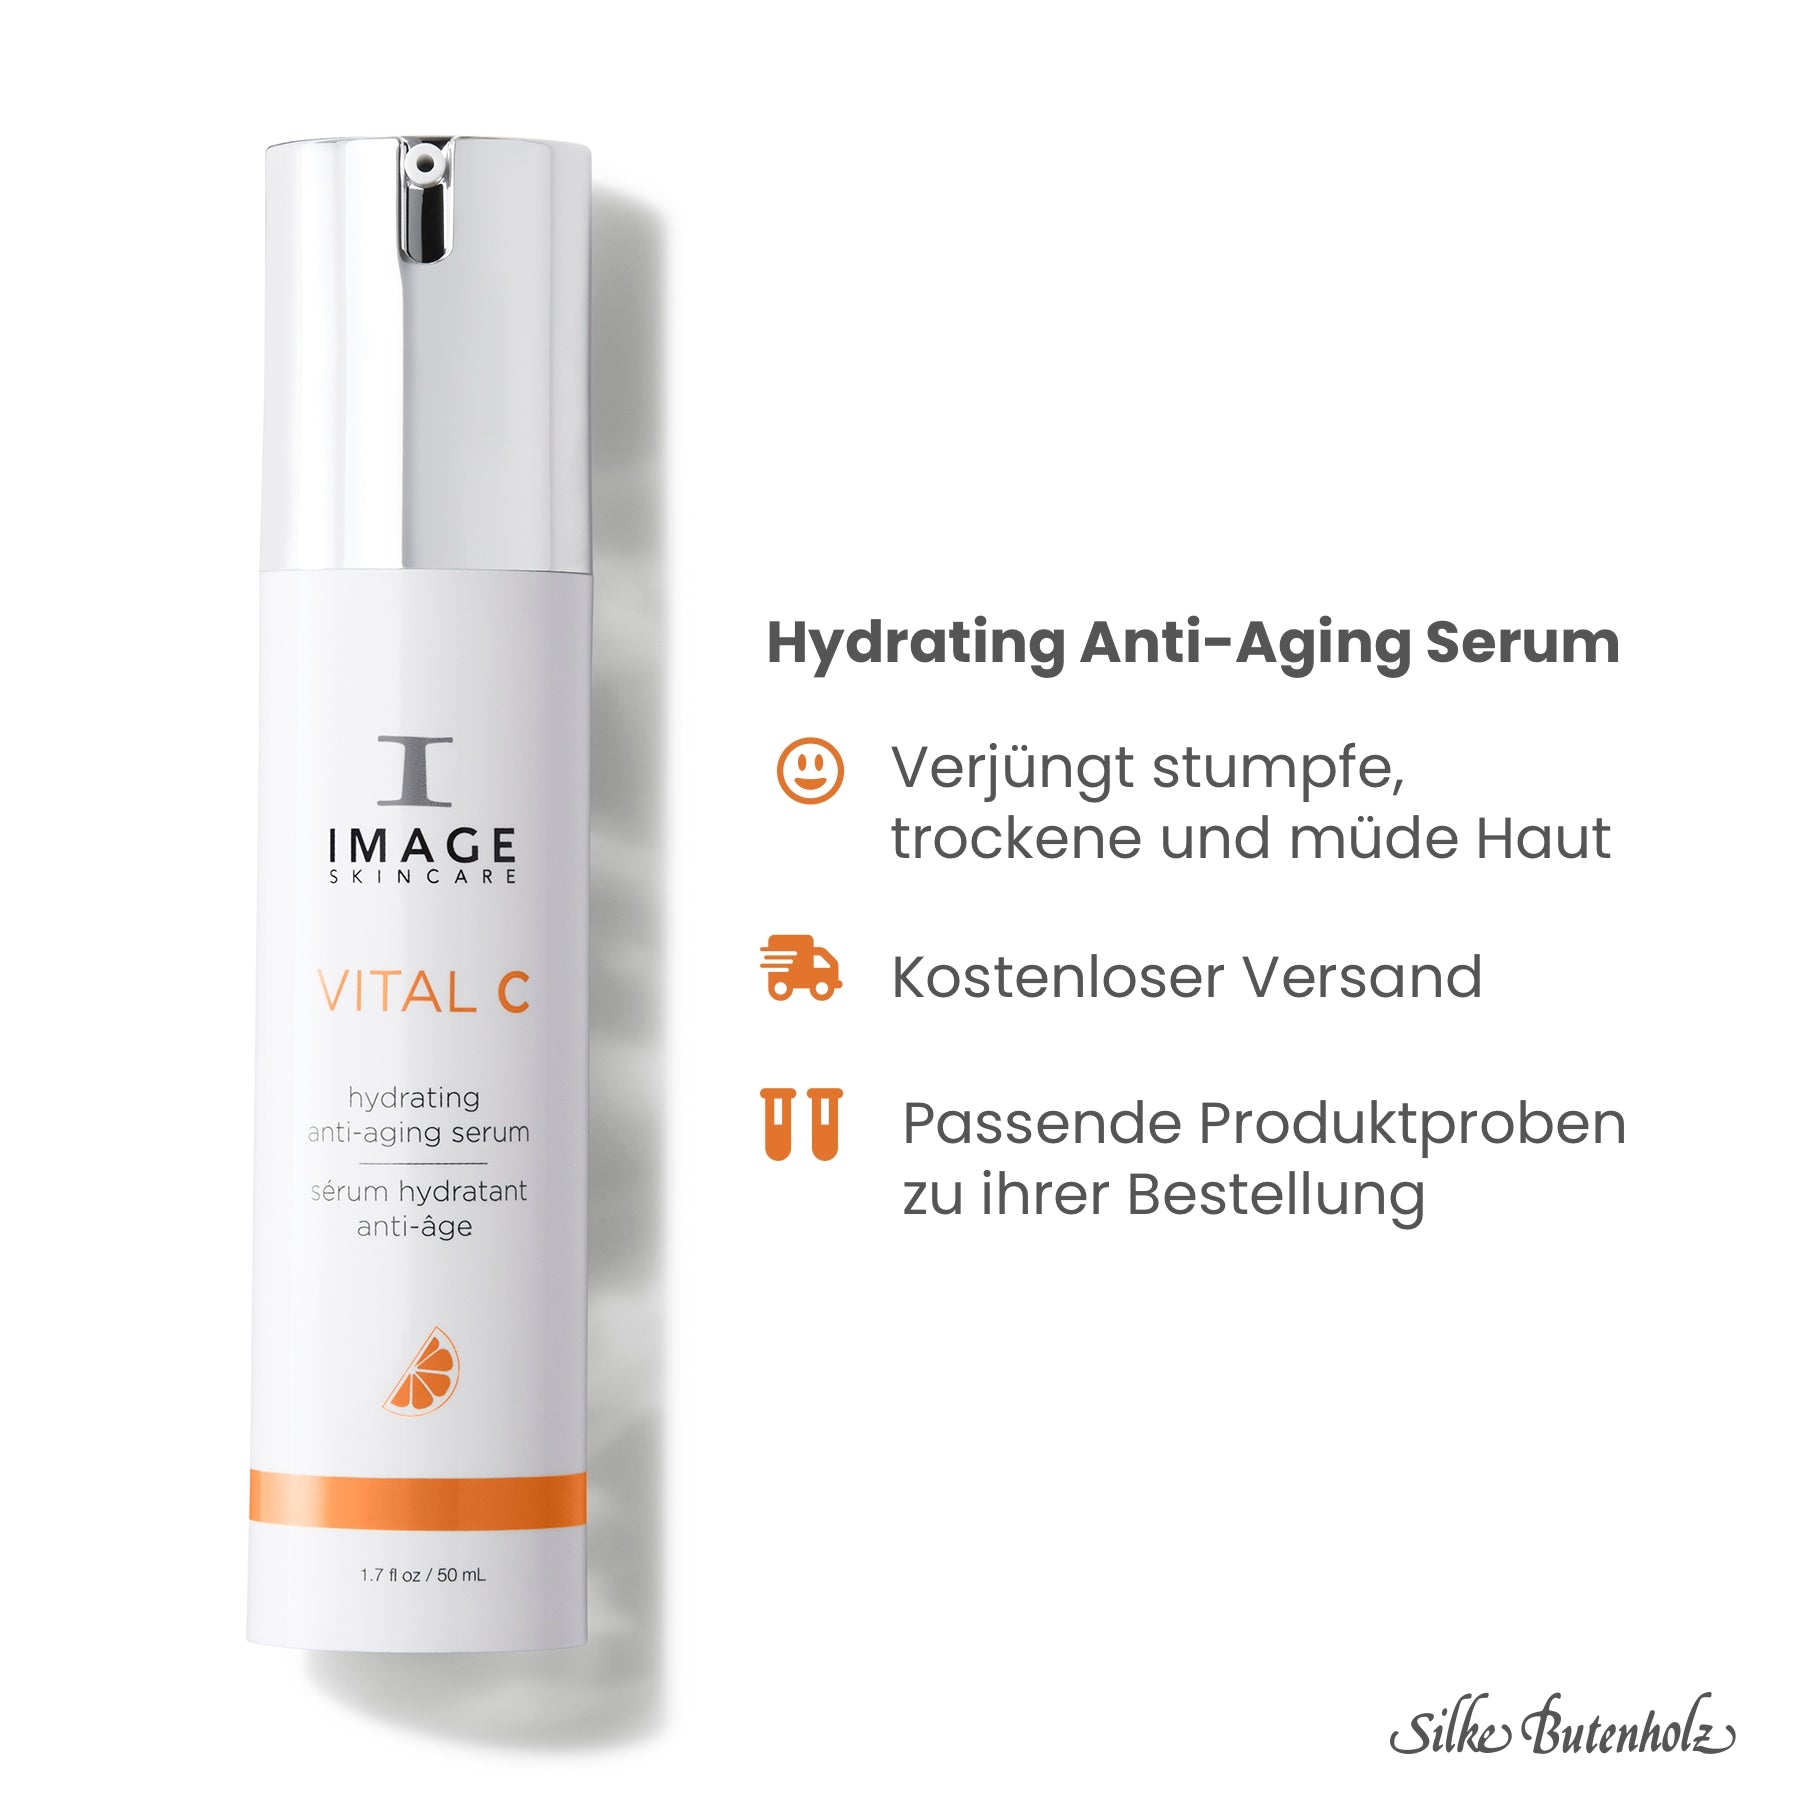 IMAGE Hydrating Anti-Aging Serum